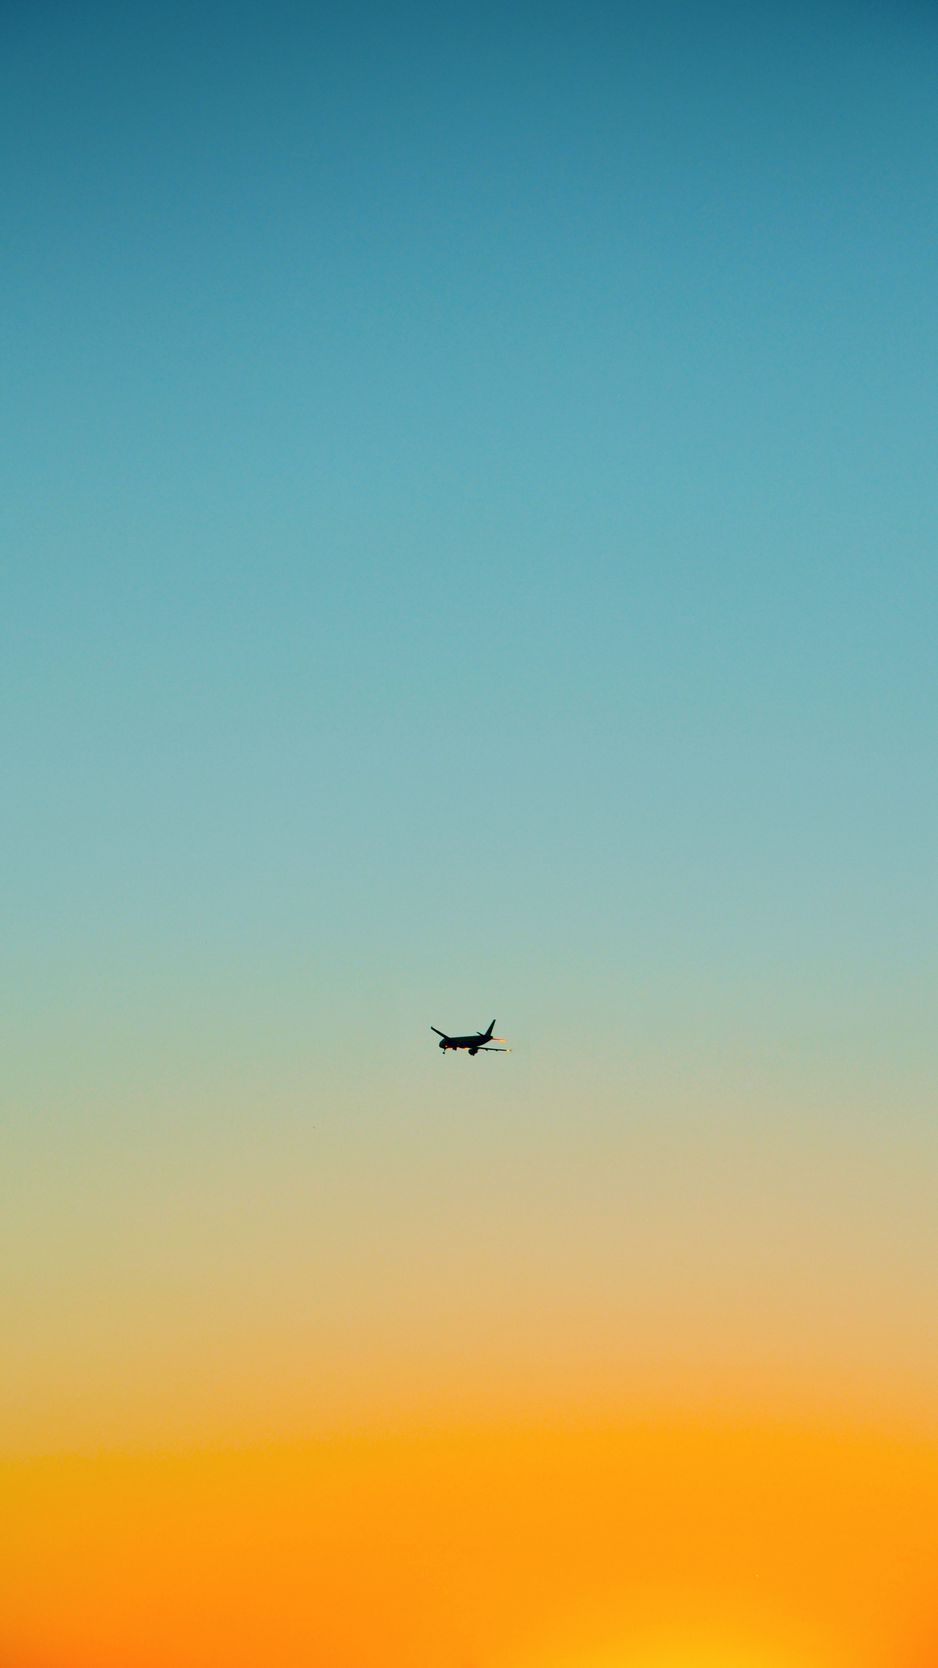 Download wallpaper 938x1668 airplane, sky, flight, minimalism